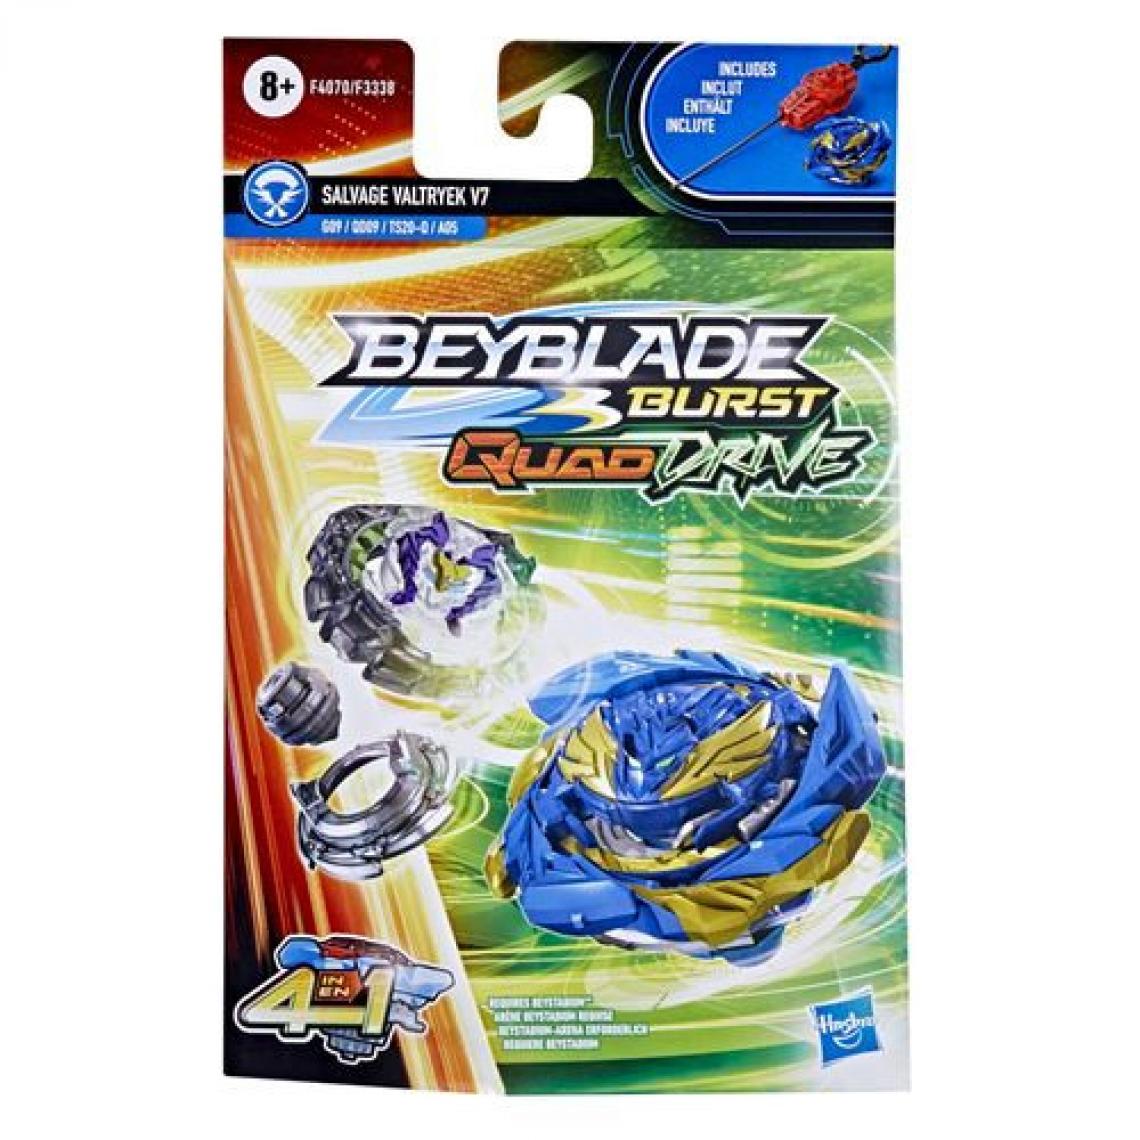 Beyblade - Toupie et lanceur Beyblade Burst QuadDrive Salvage Valtryek V7 - Animaux